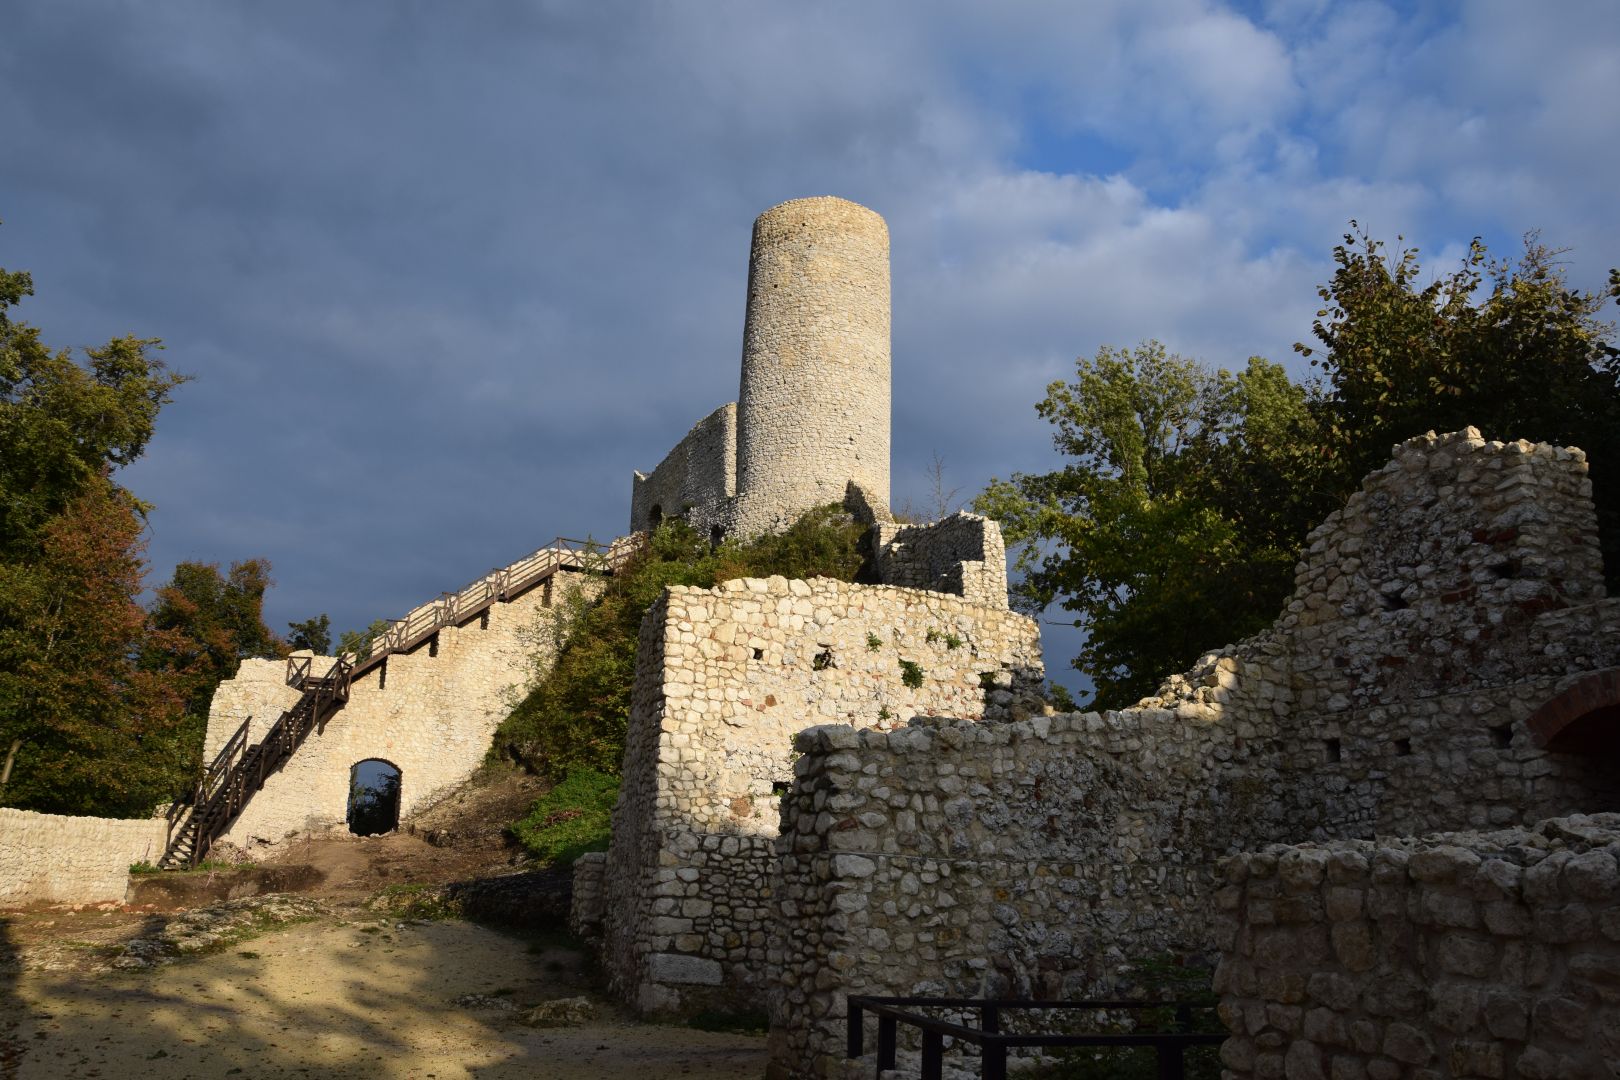 The ruins of the castle in Smolen